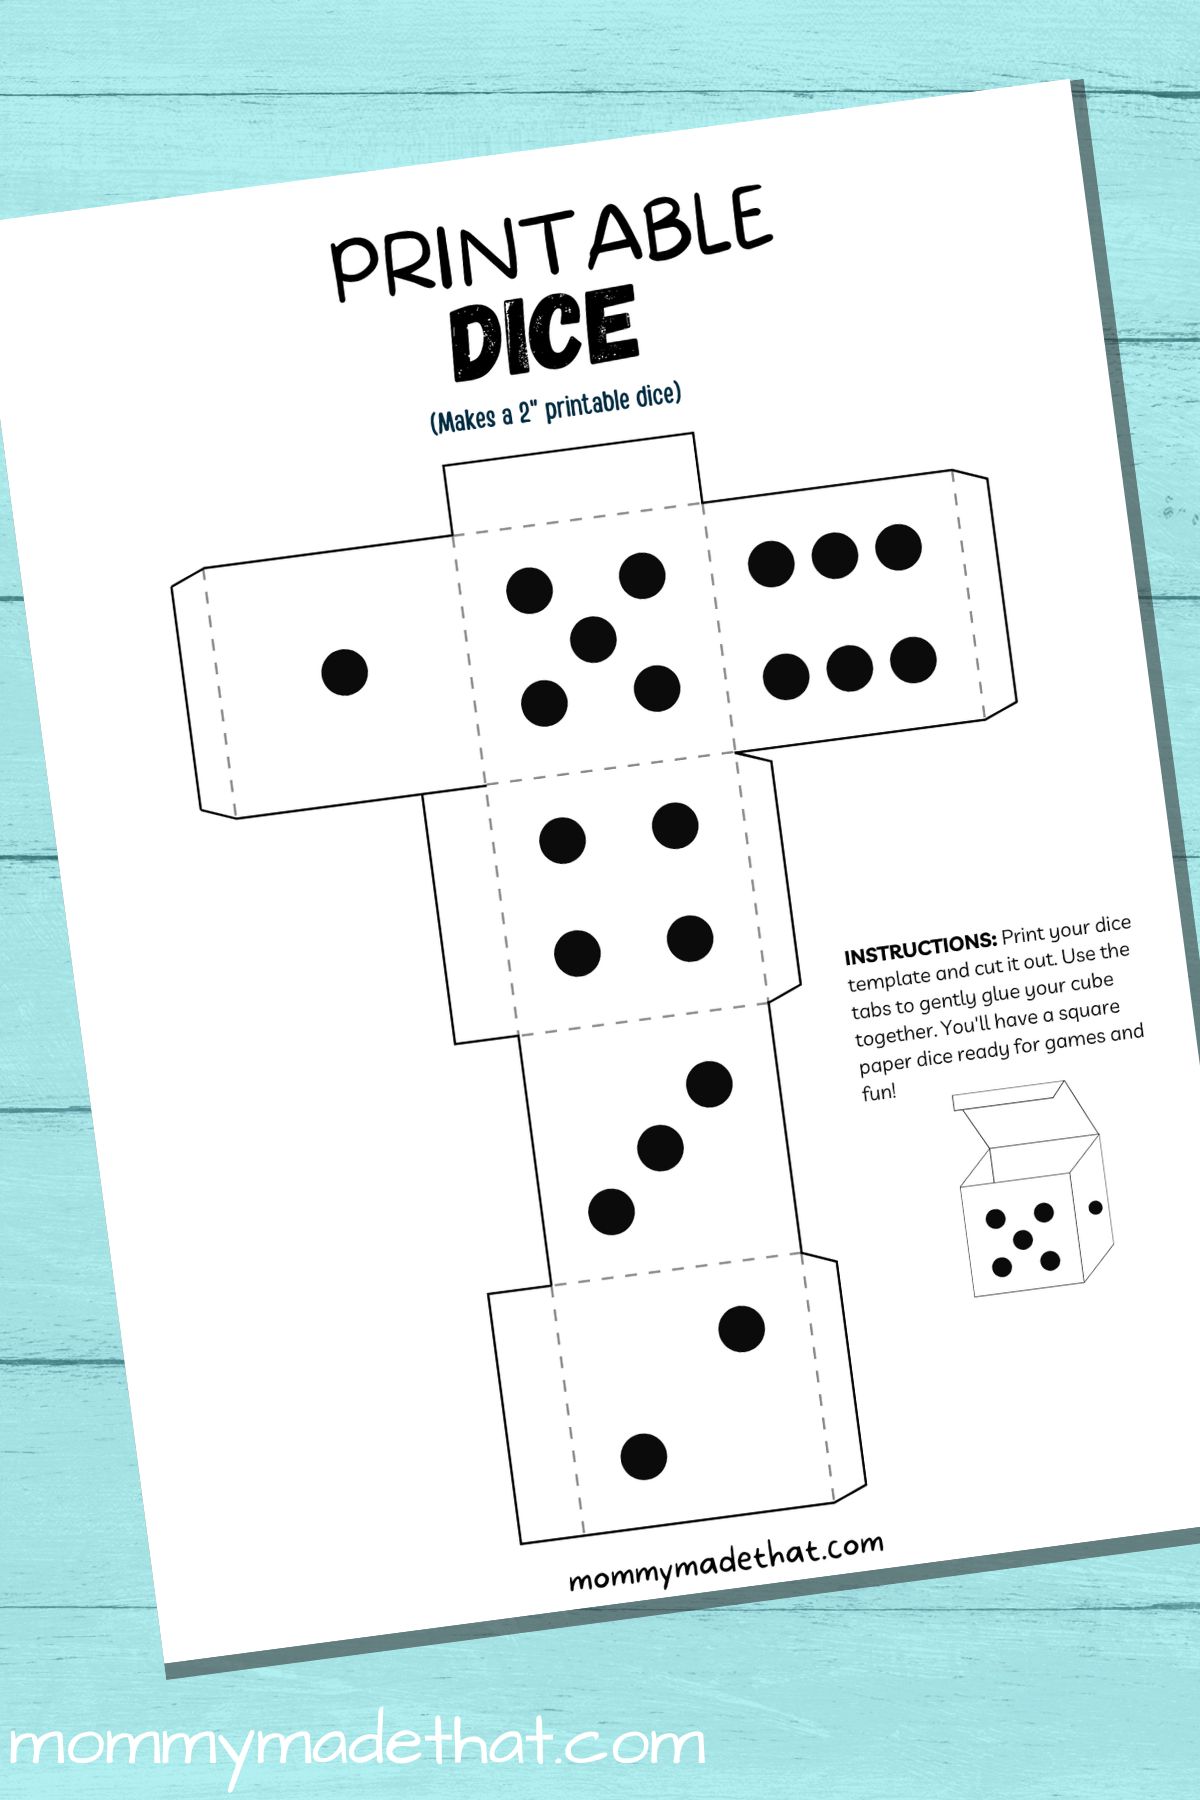 Printable dice templates